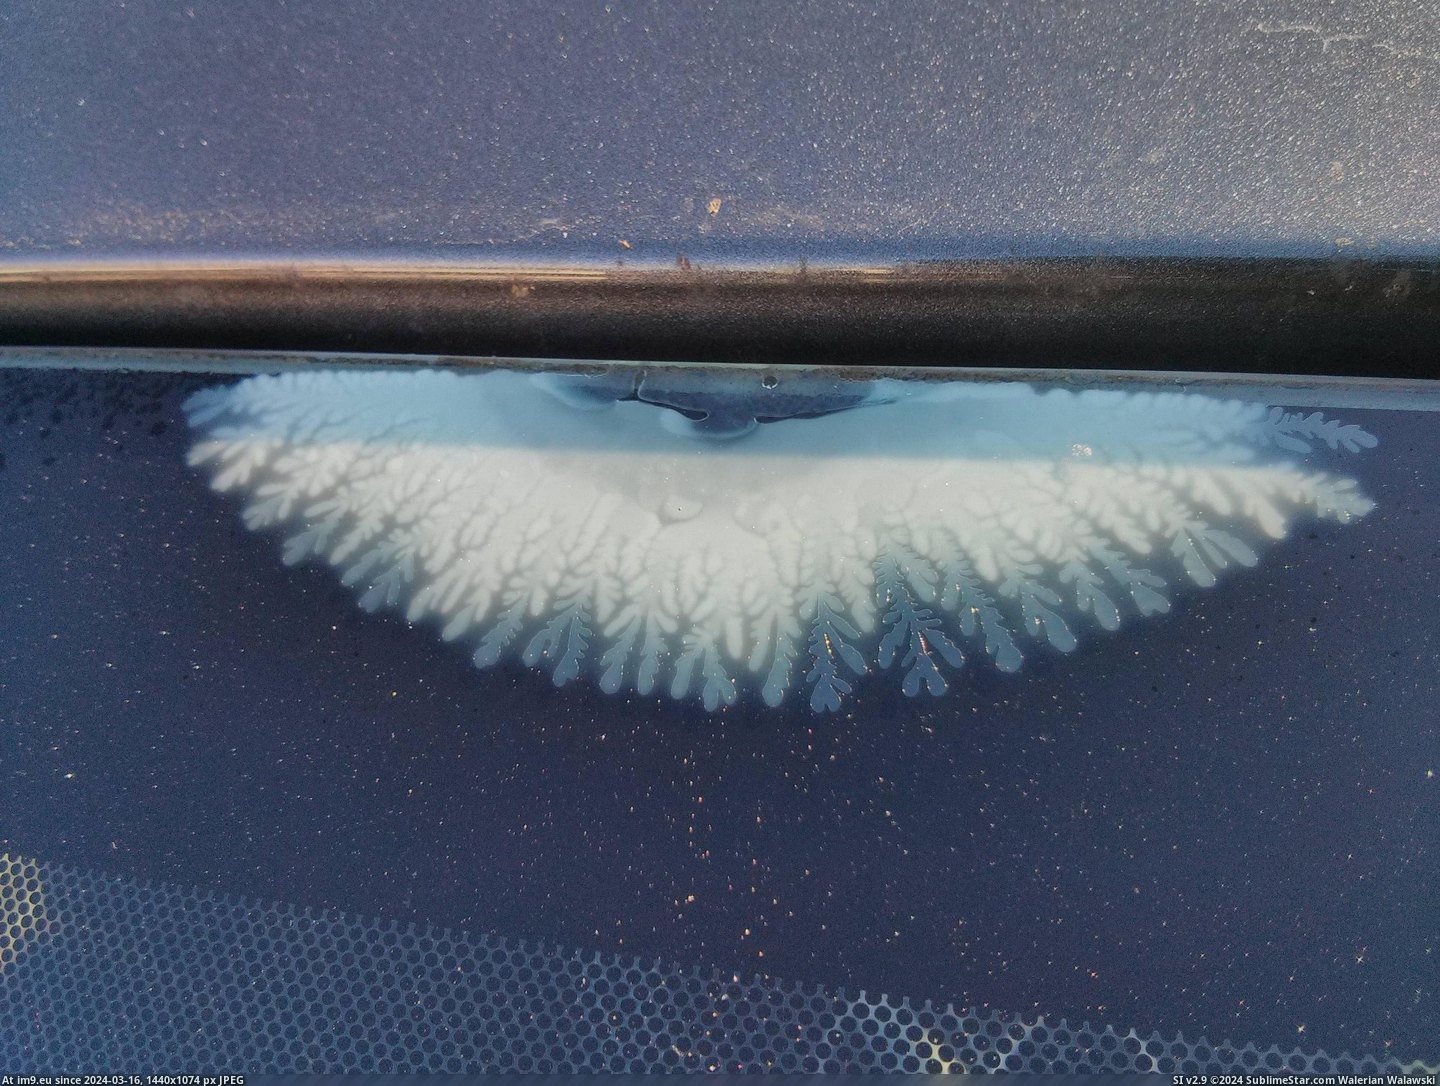 #Pattern #Delaminating #Windshield [Mildlyinteresting] This windshield is delaminating in a pattern. Pic. (Изображение из альбом My r/MILDLYINTERESTING favs))